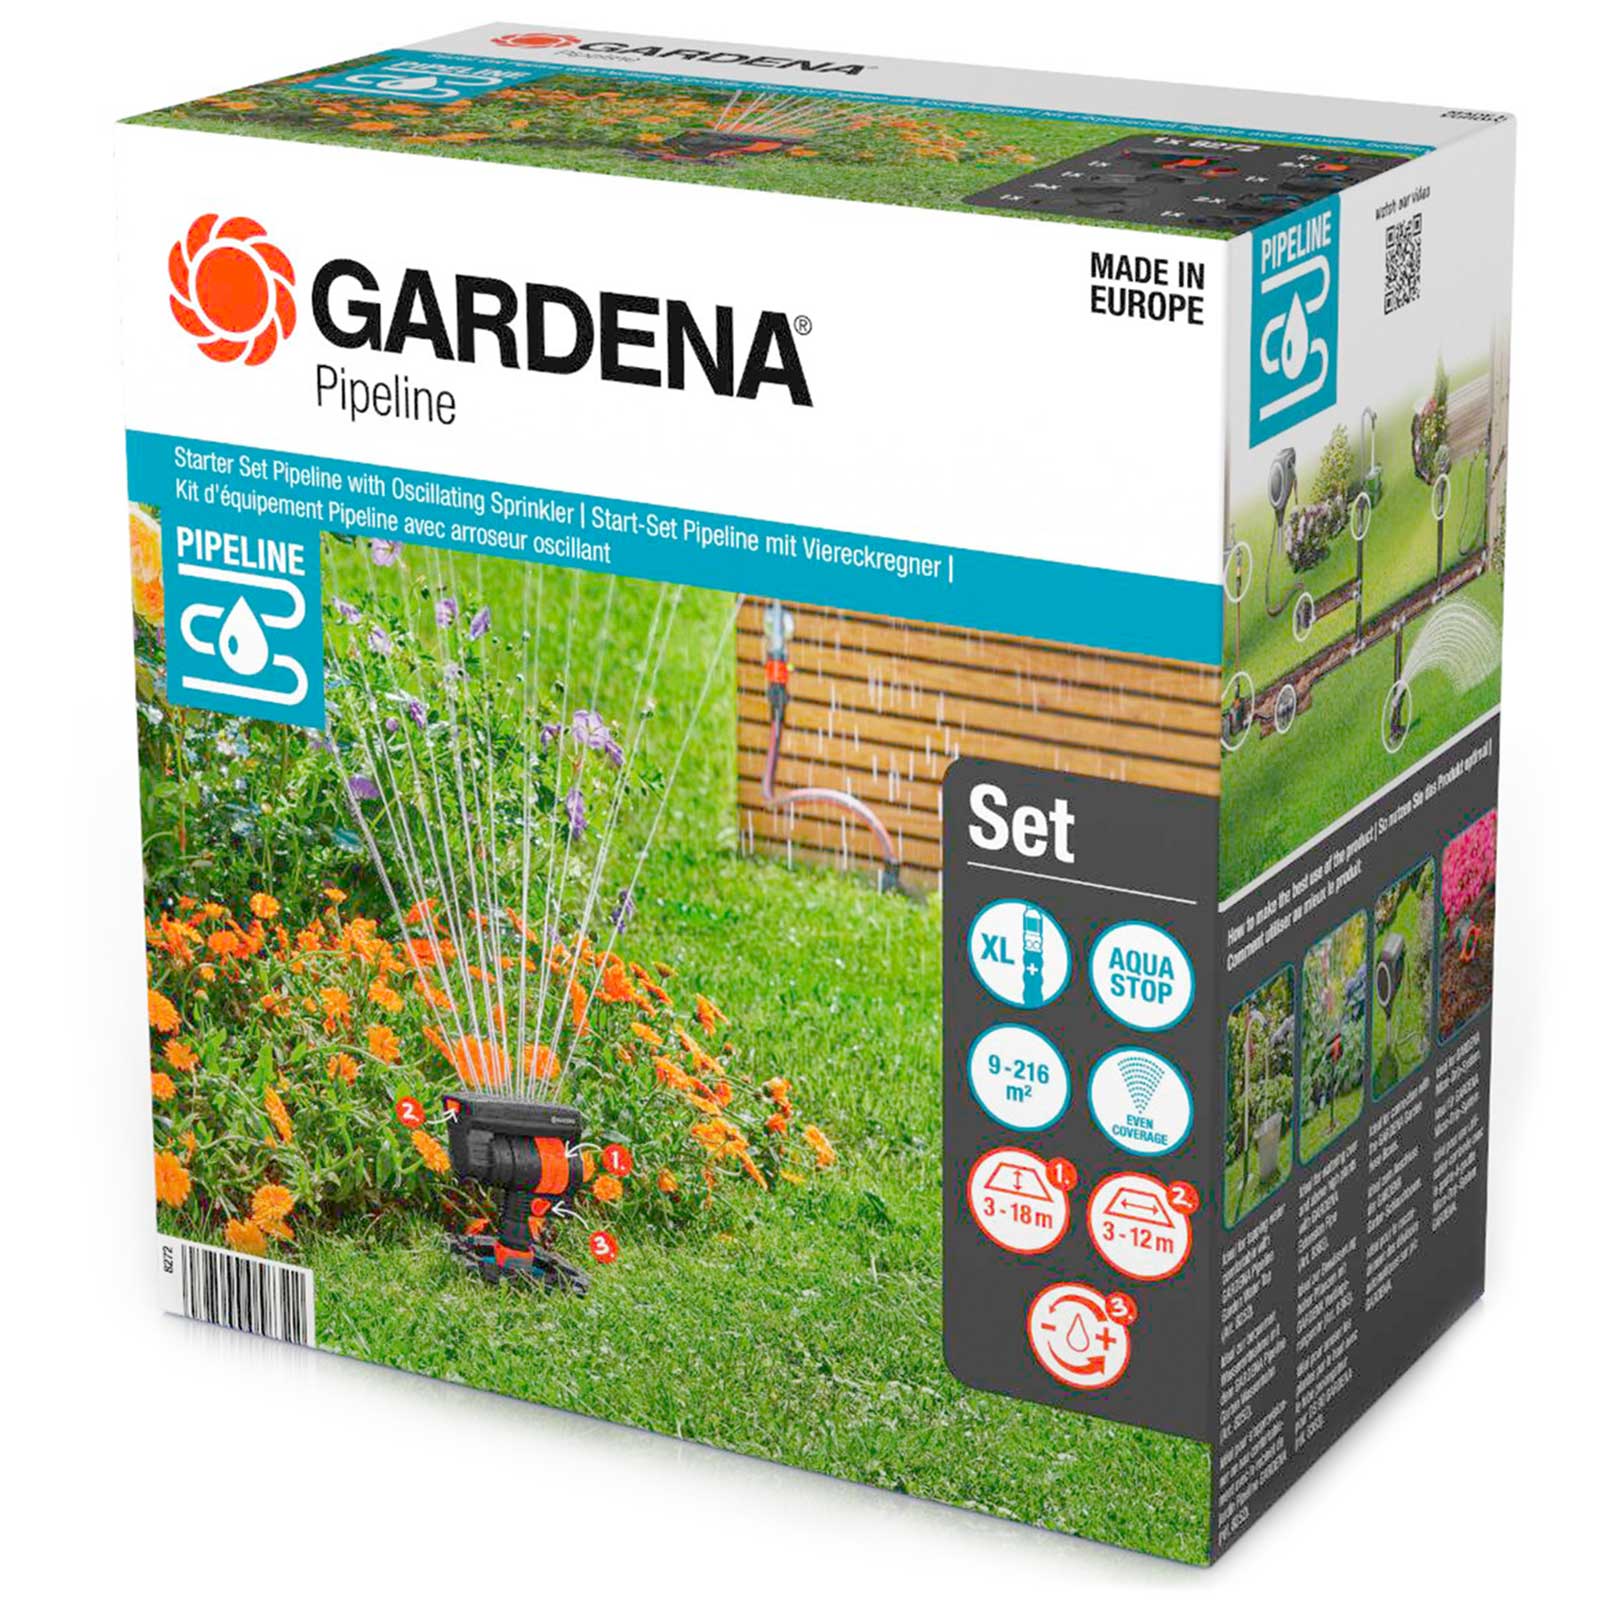 Image of Gardena PIPELINE Starter Set with Sprinkler